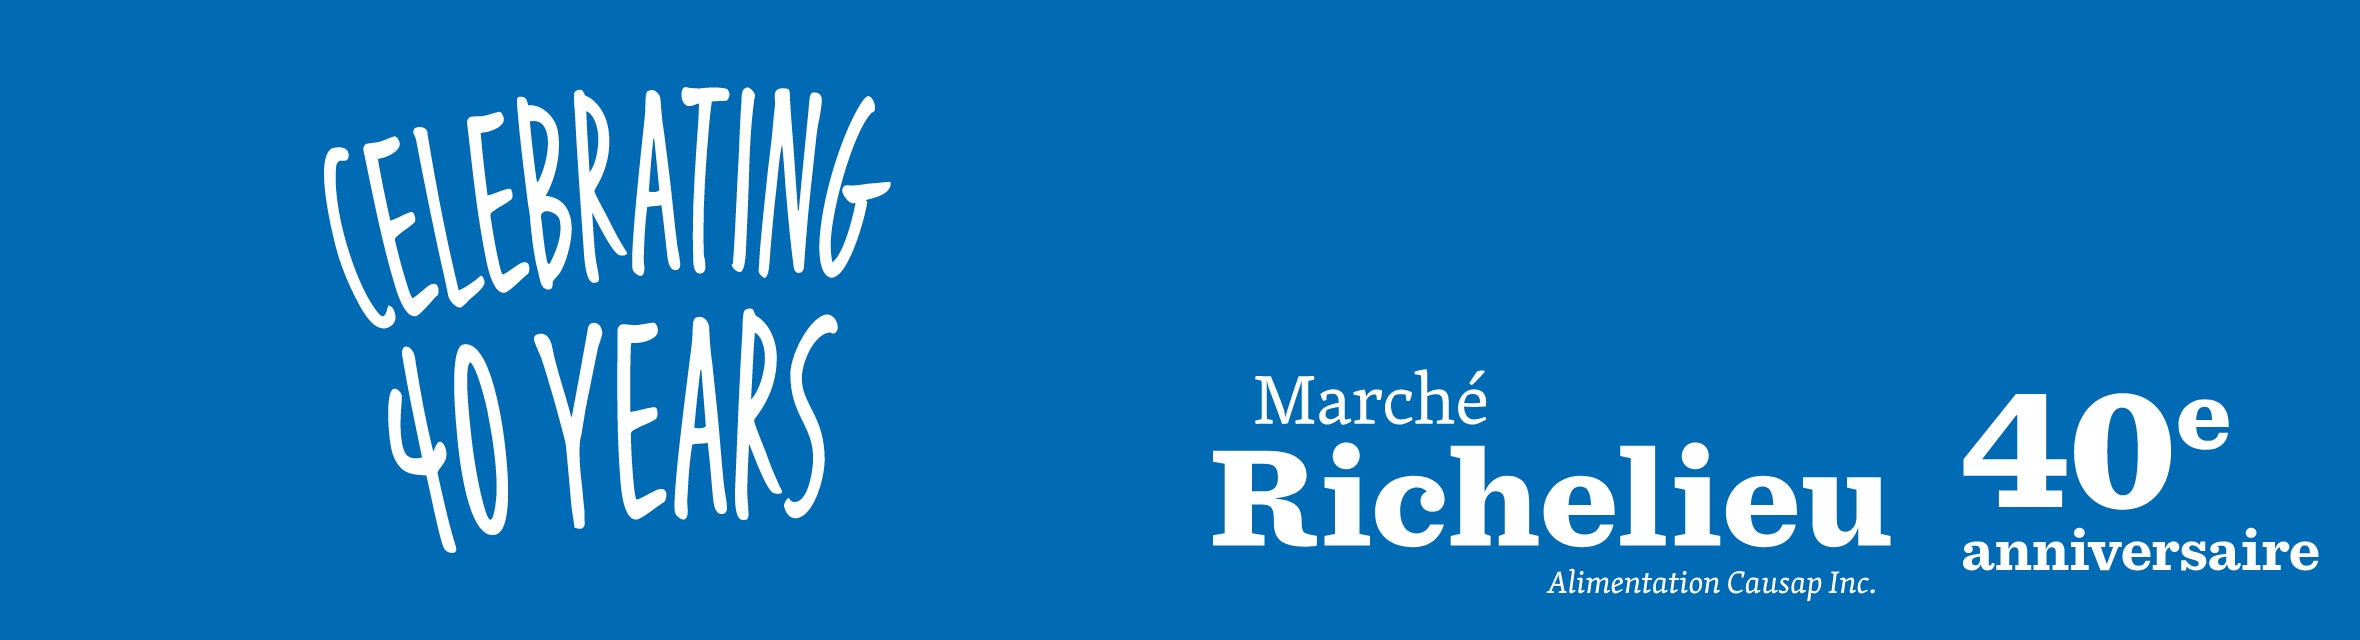 Marché Richelieu Alimentation Causap Inc. Celebrating 40 years